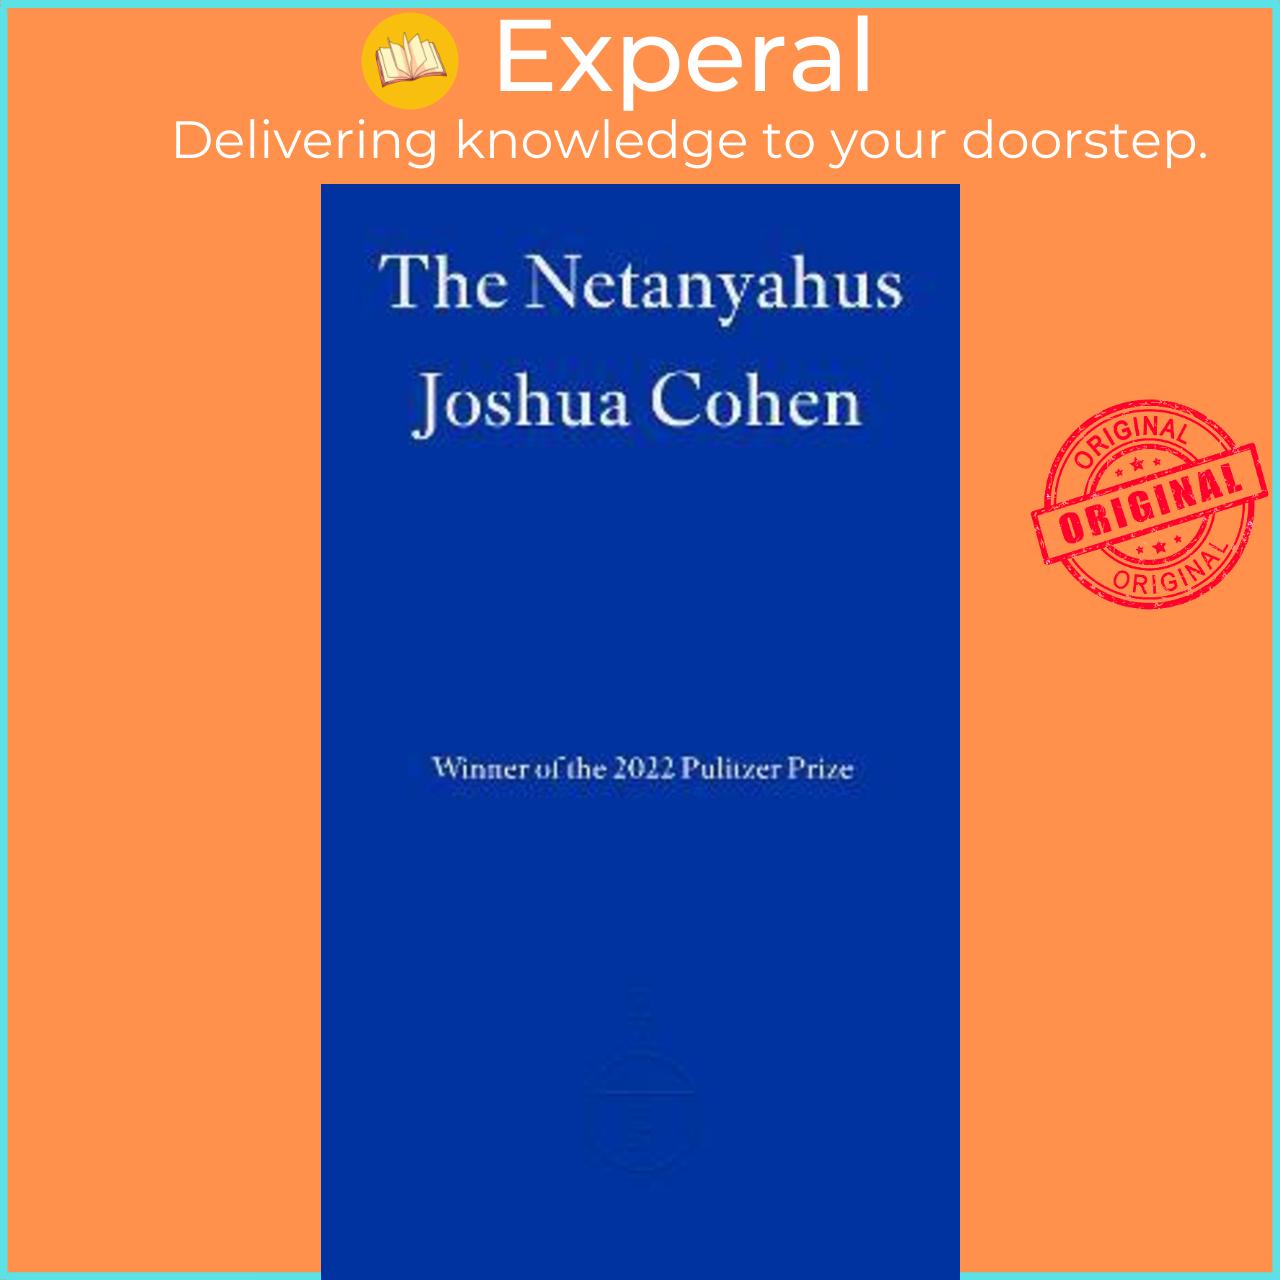 Sách - The Netanyahus by Joshua Cohen (UK edition, paperback)